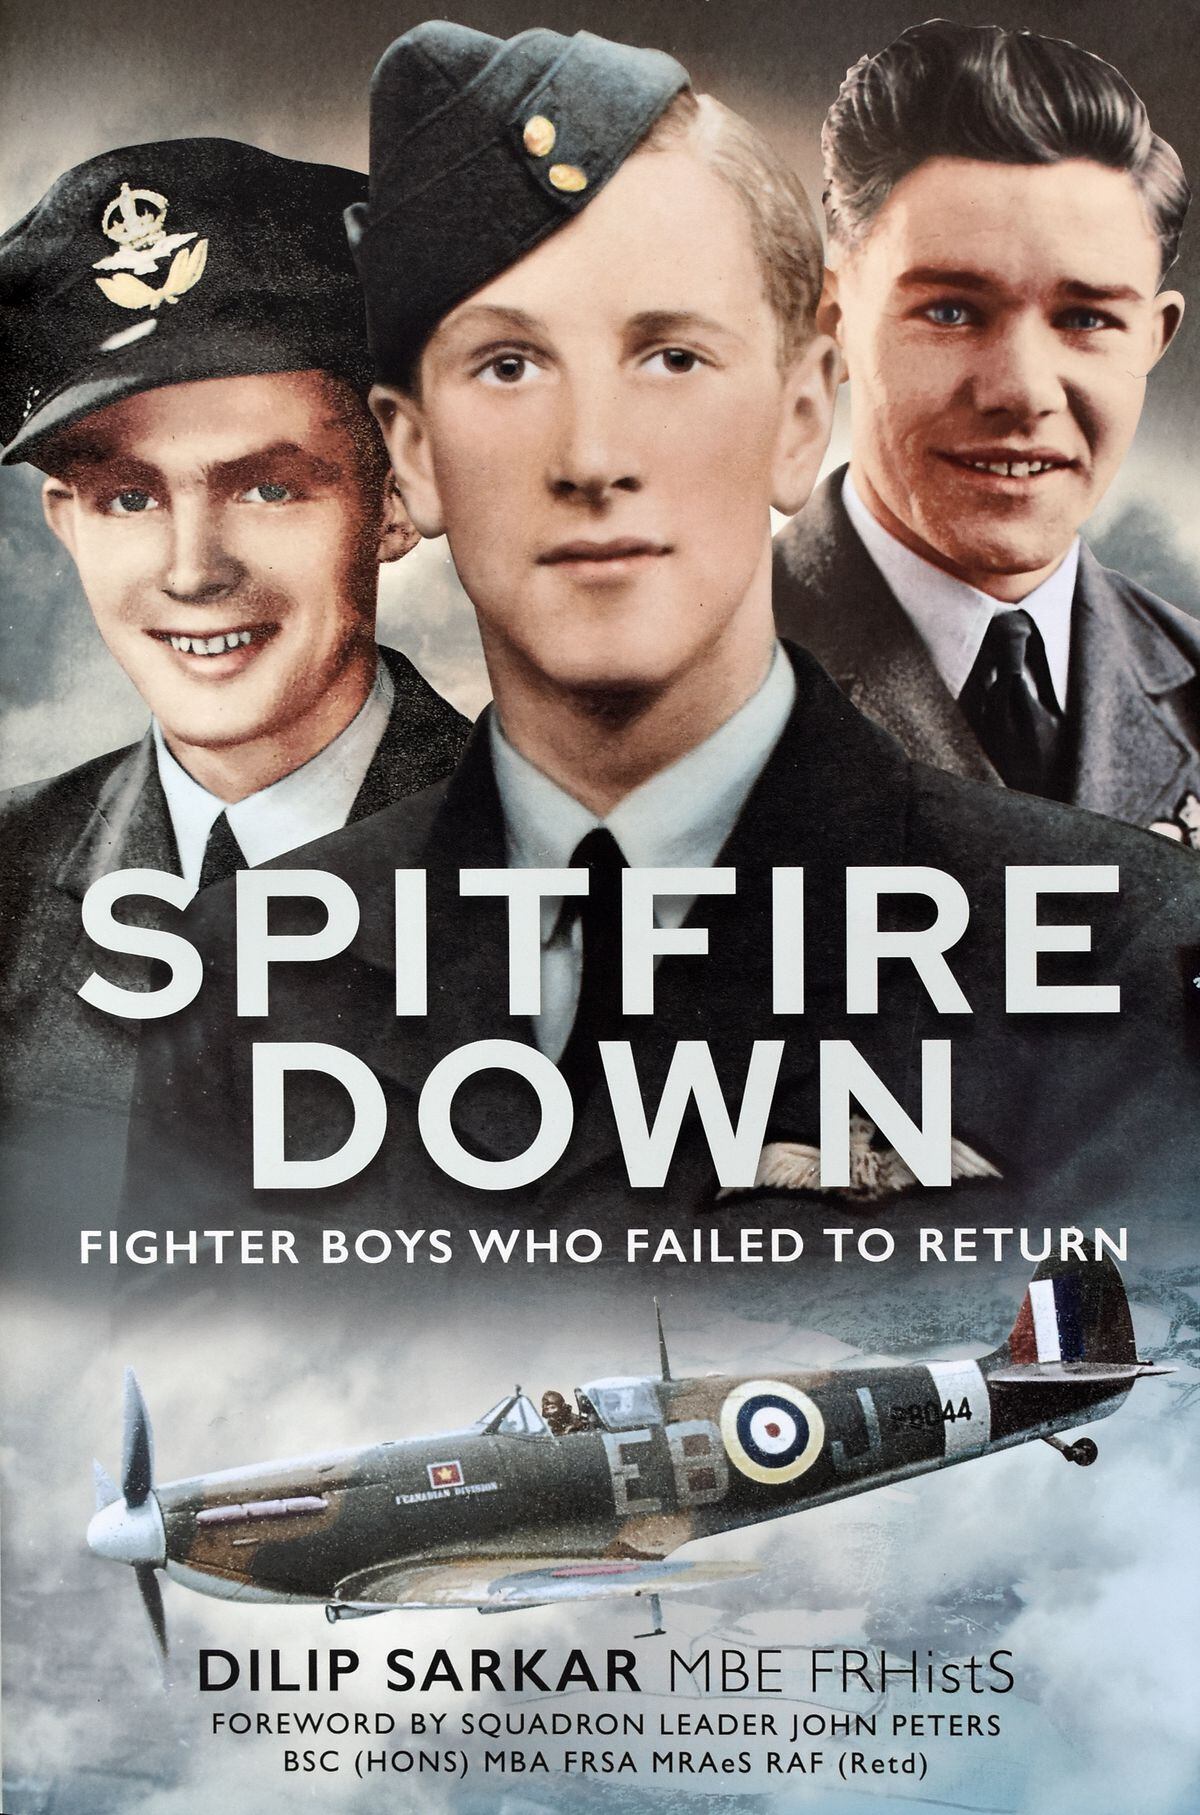 Spitfire Down by Dilip Sarkar